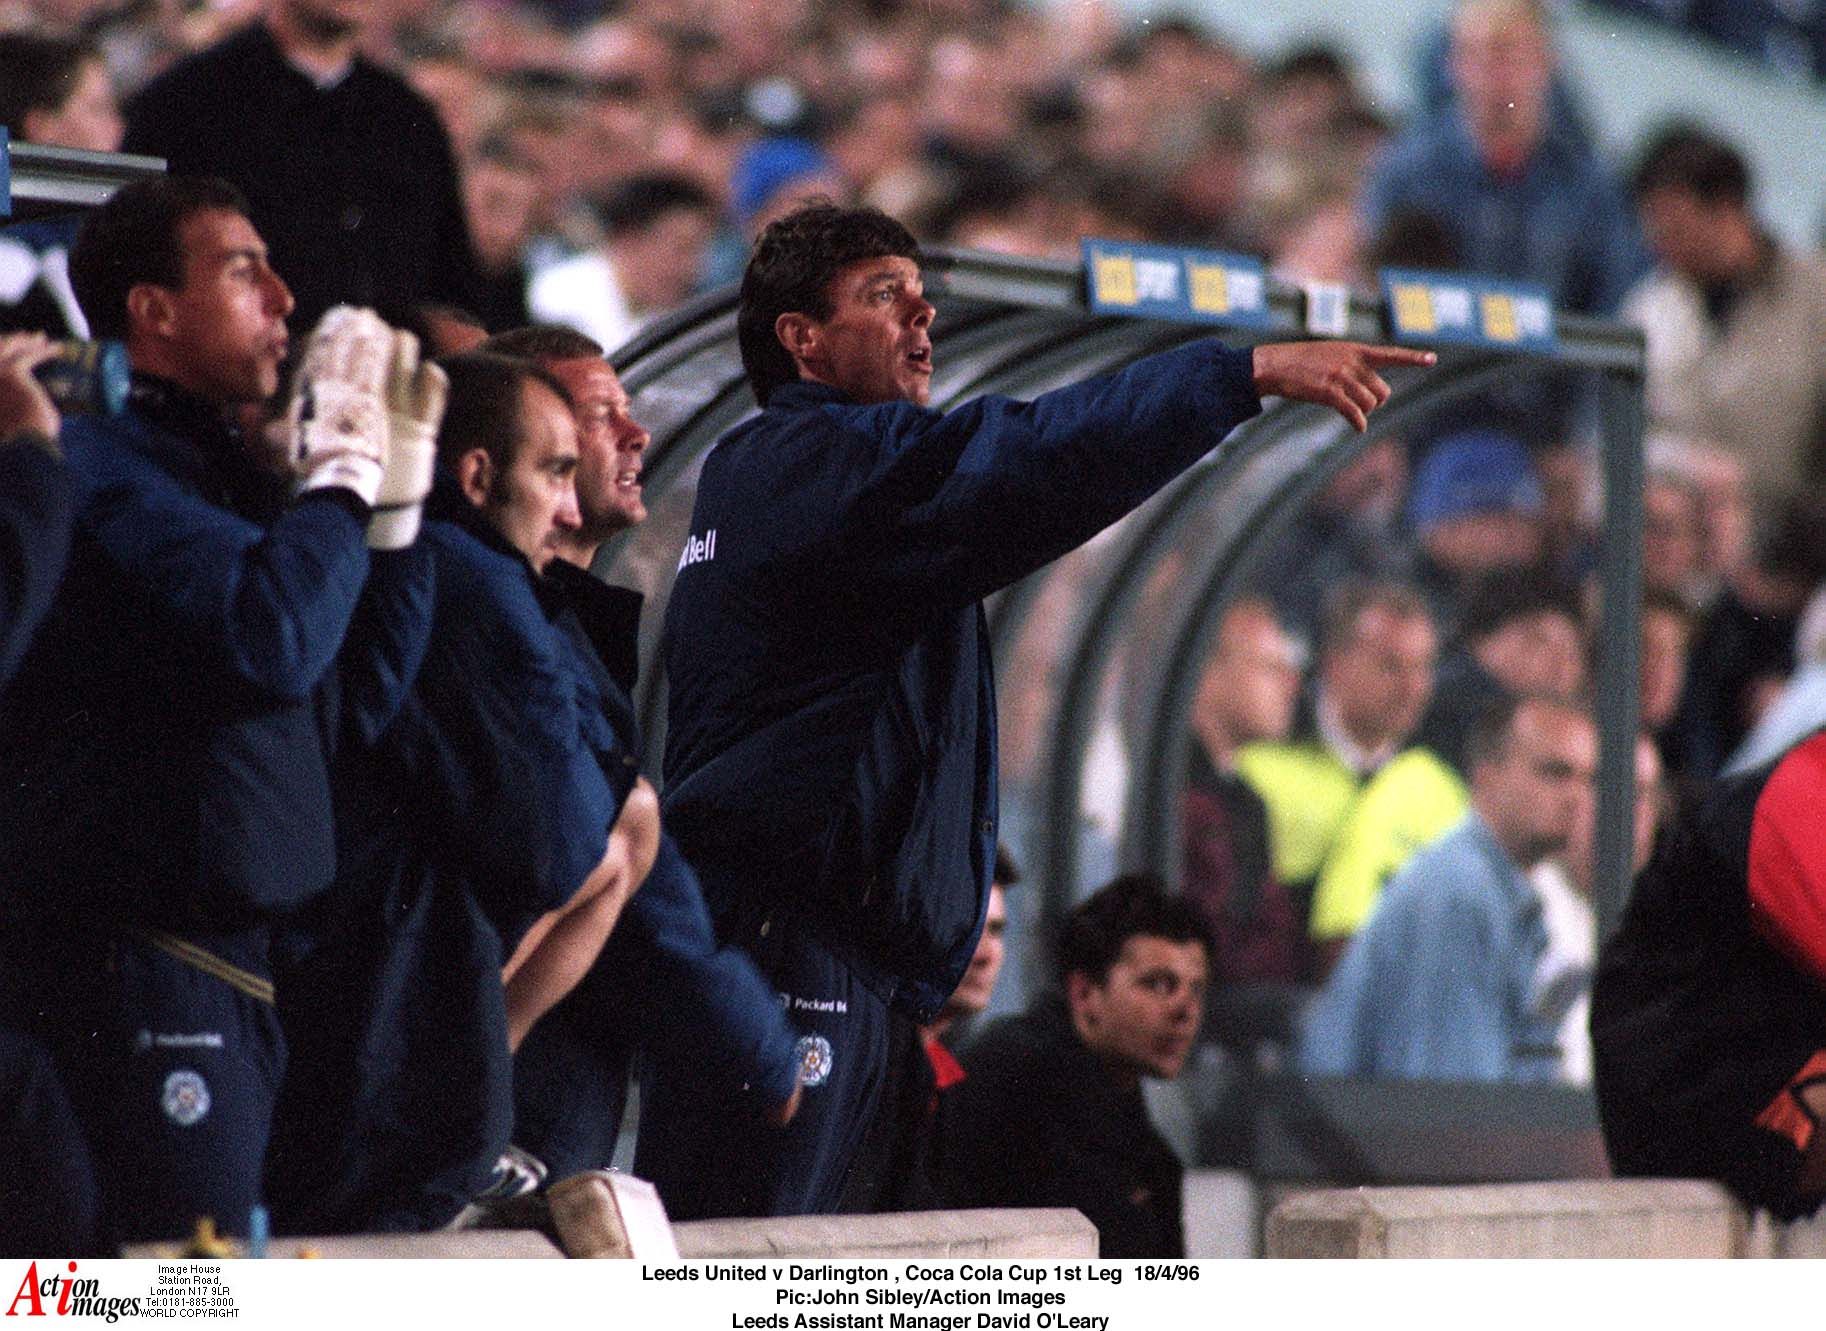 Leeds United v Darlington , Coca Cola Cup 1st Leg  18/4/96 
Pic:John Sibley/Action Images 
Leeds Assistant Manager David O'Leary